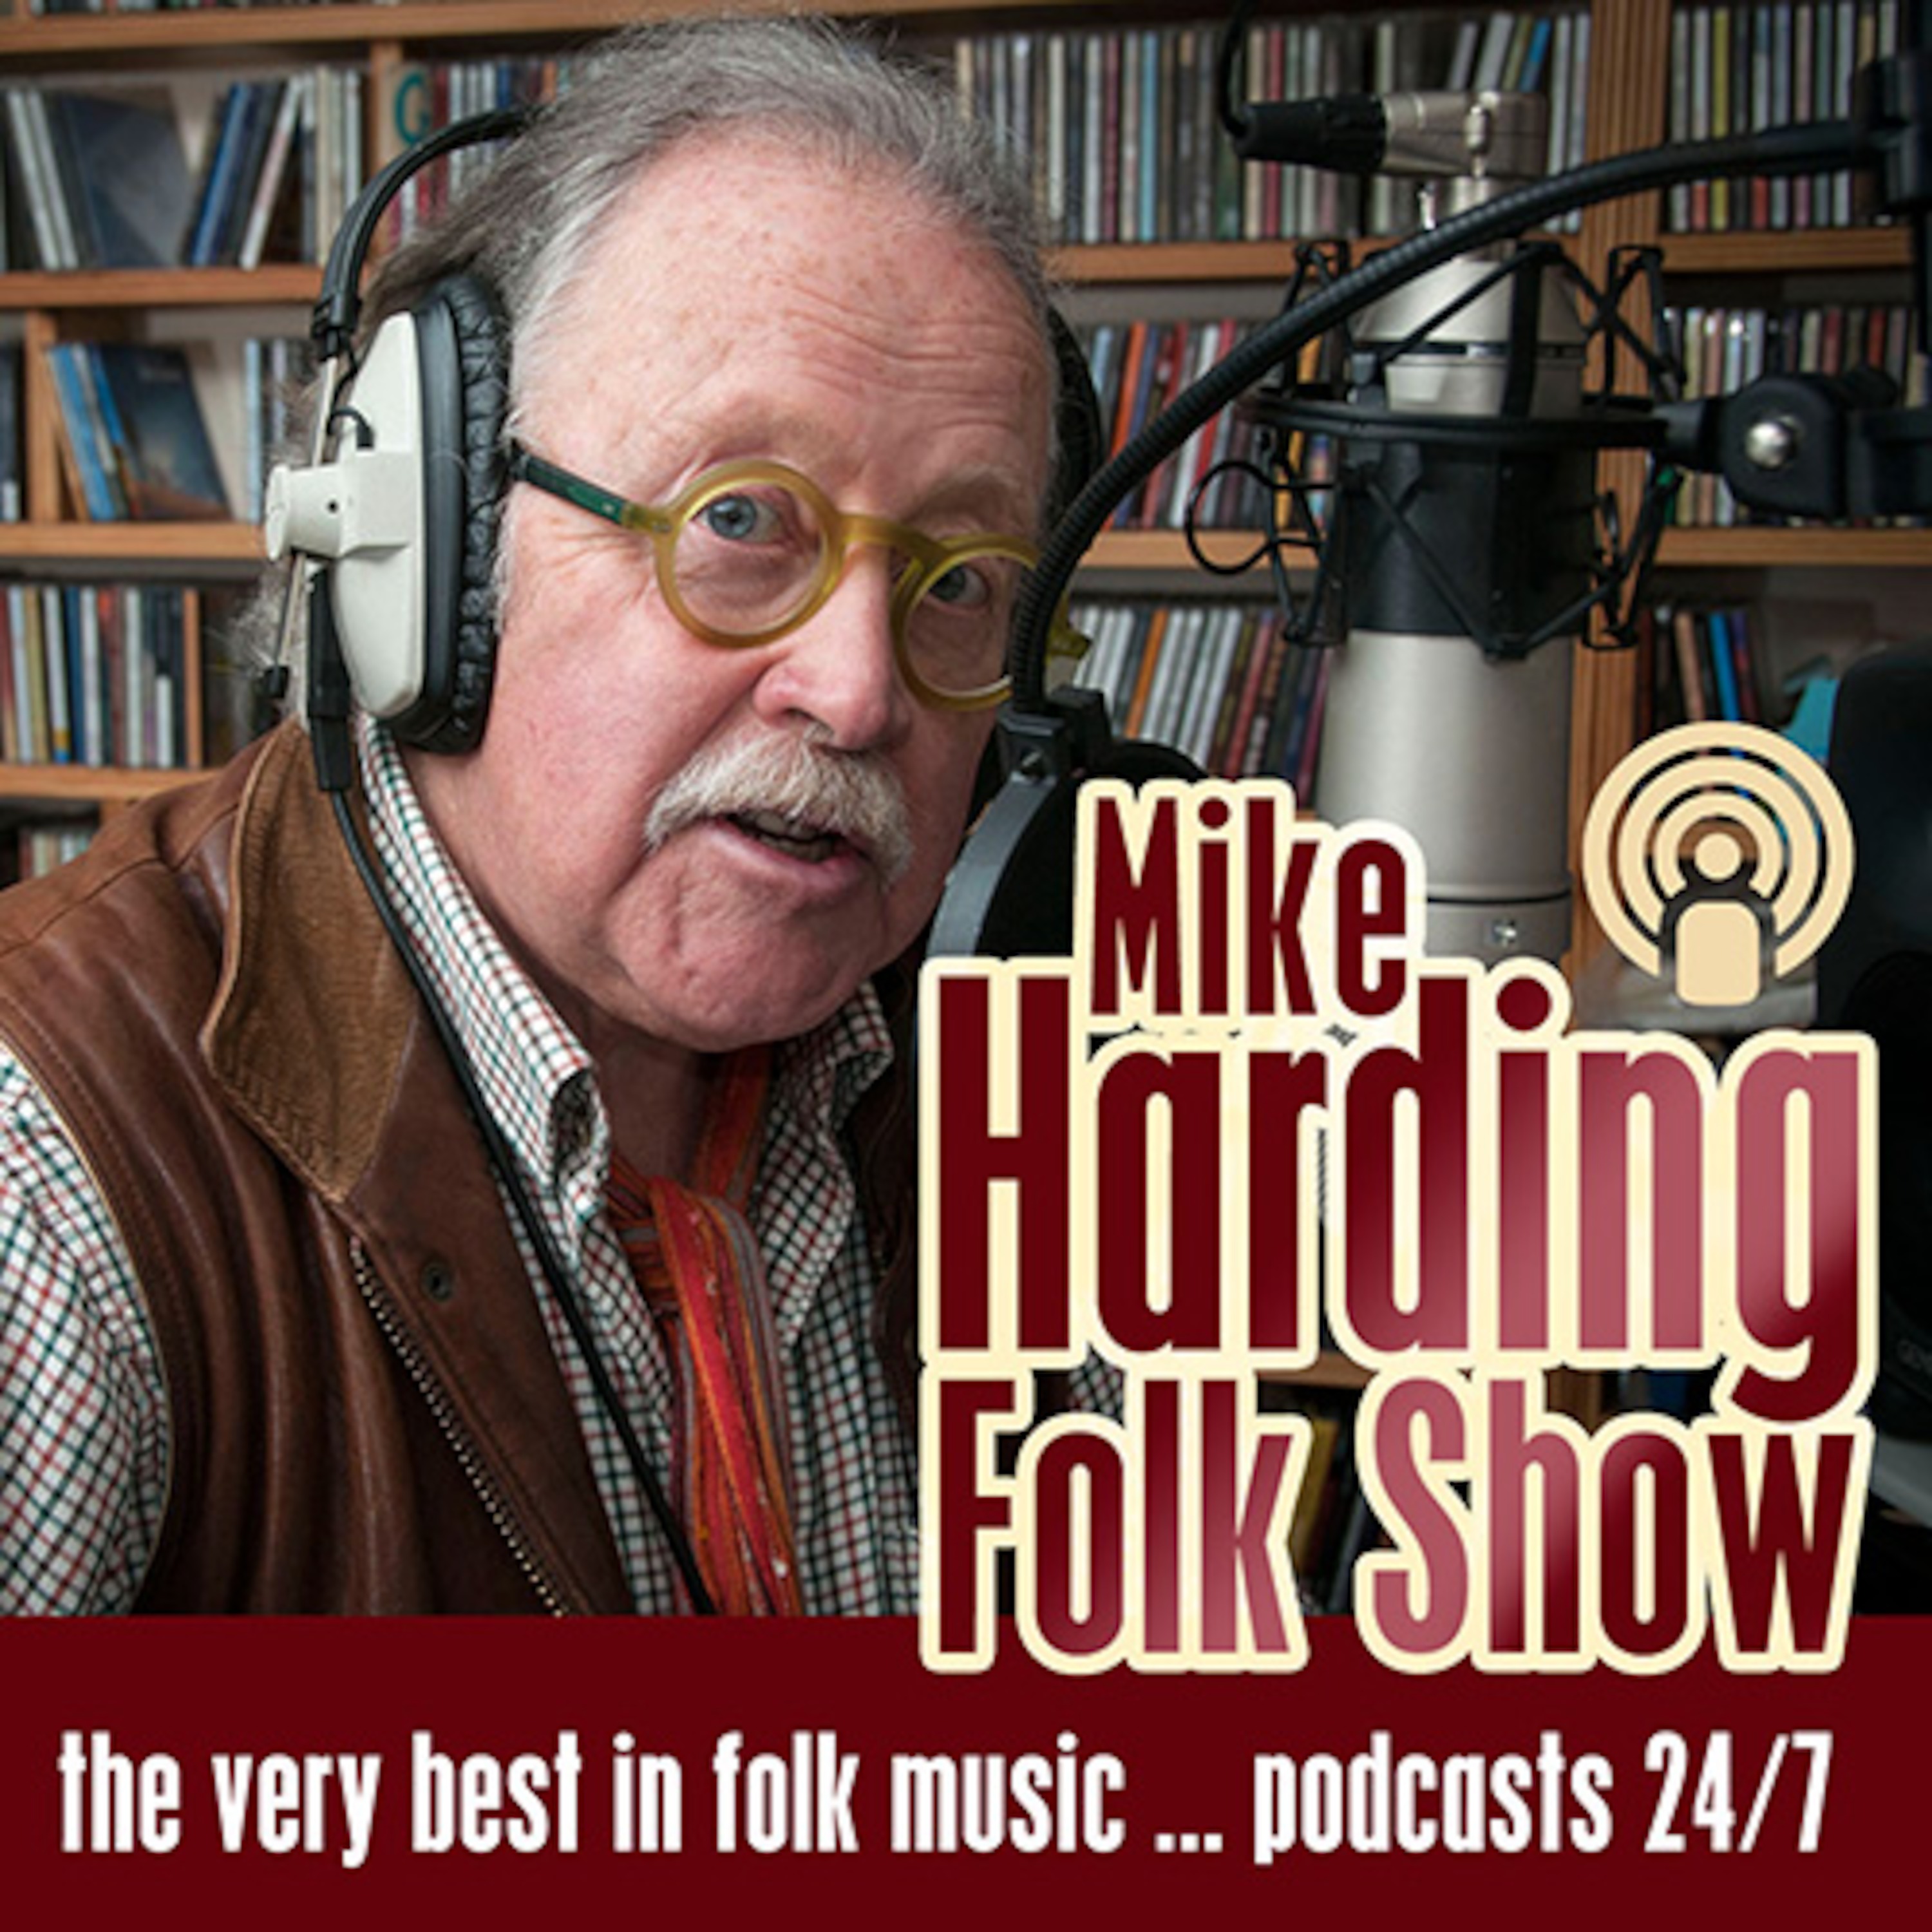 Mike Harding Folk Show 11